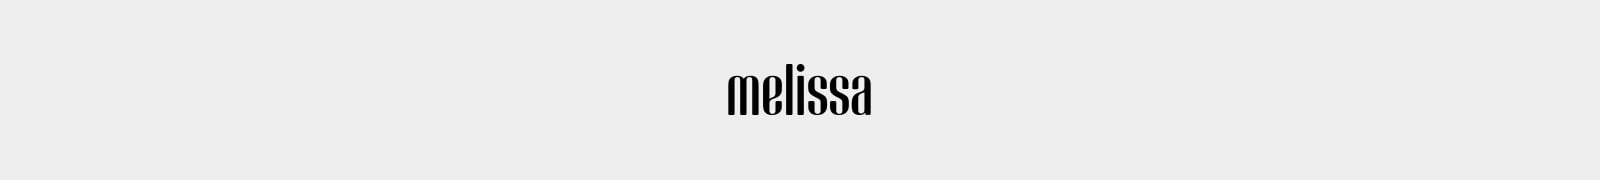 Melissa header image